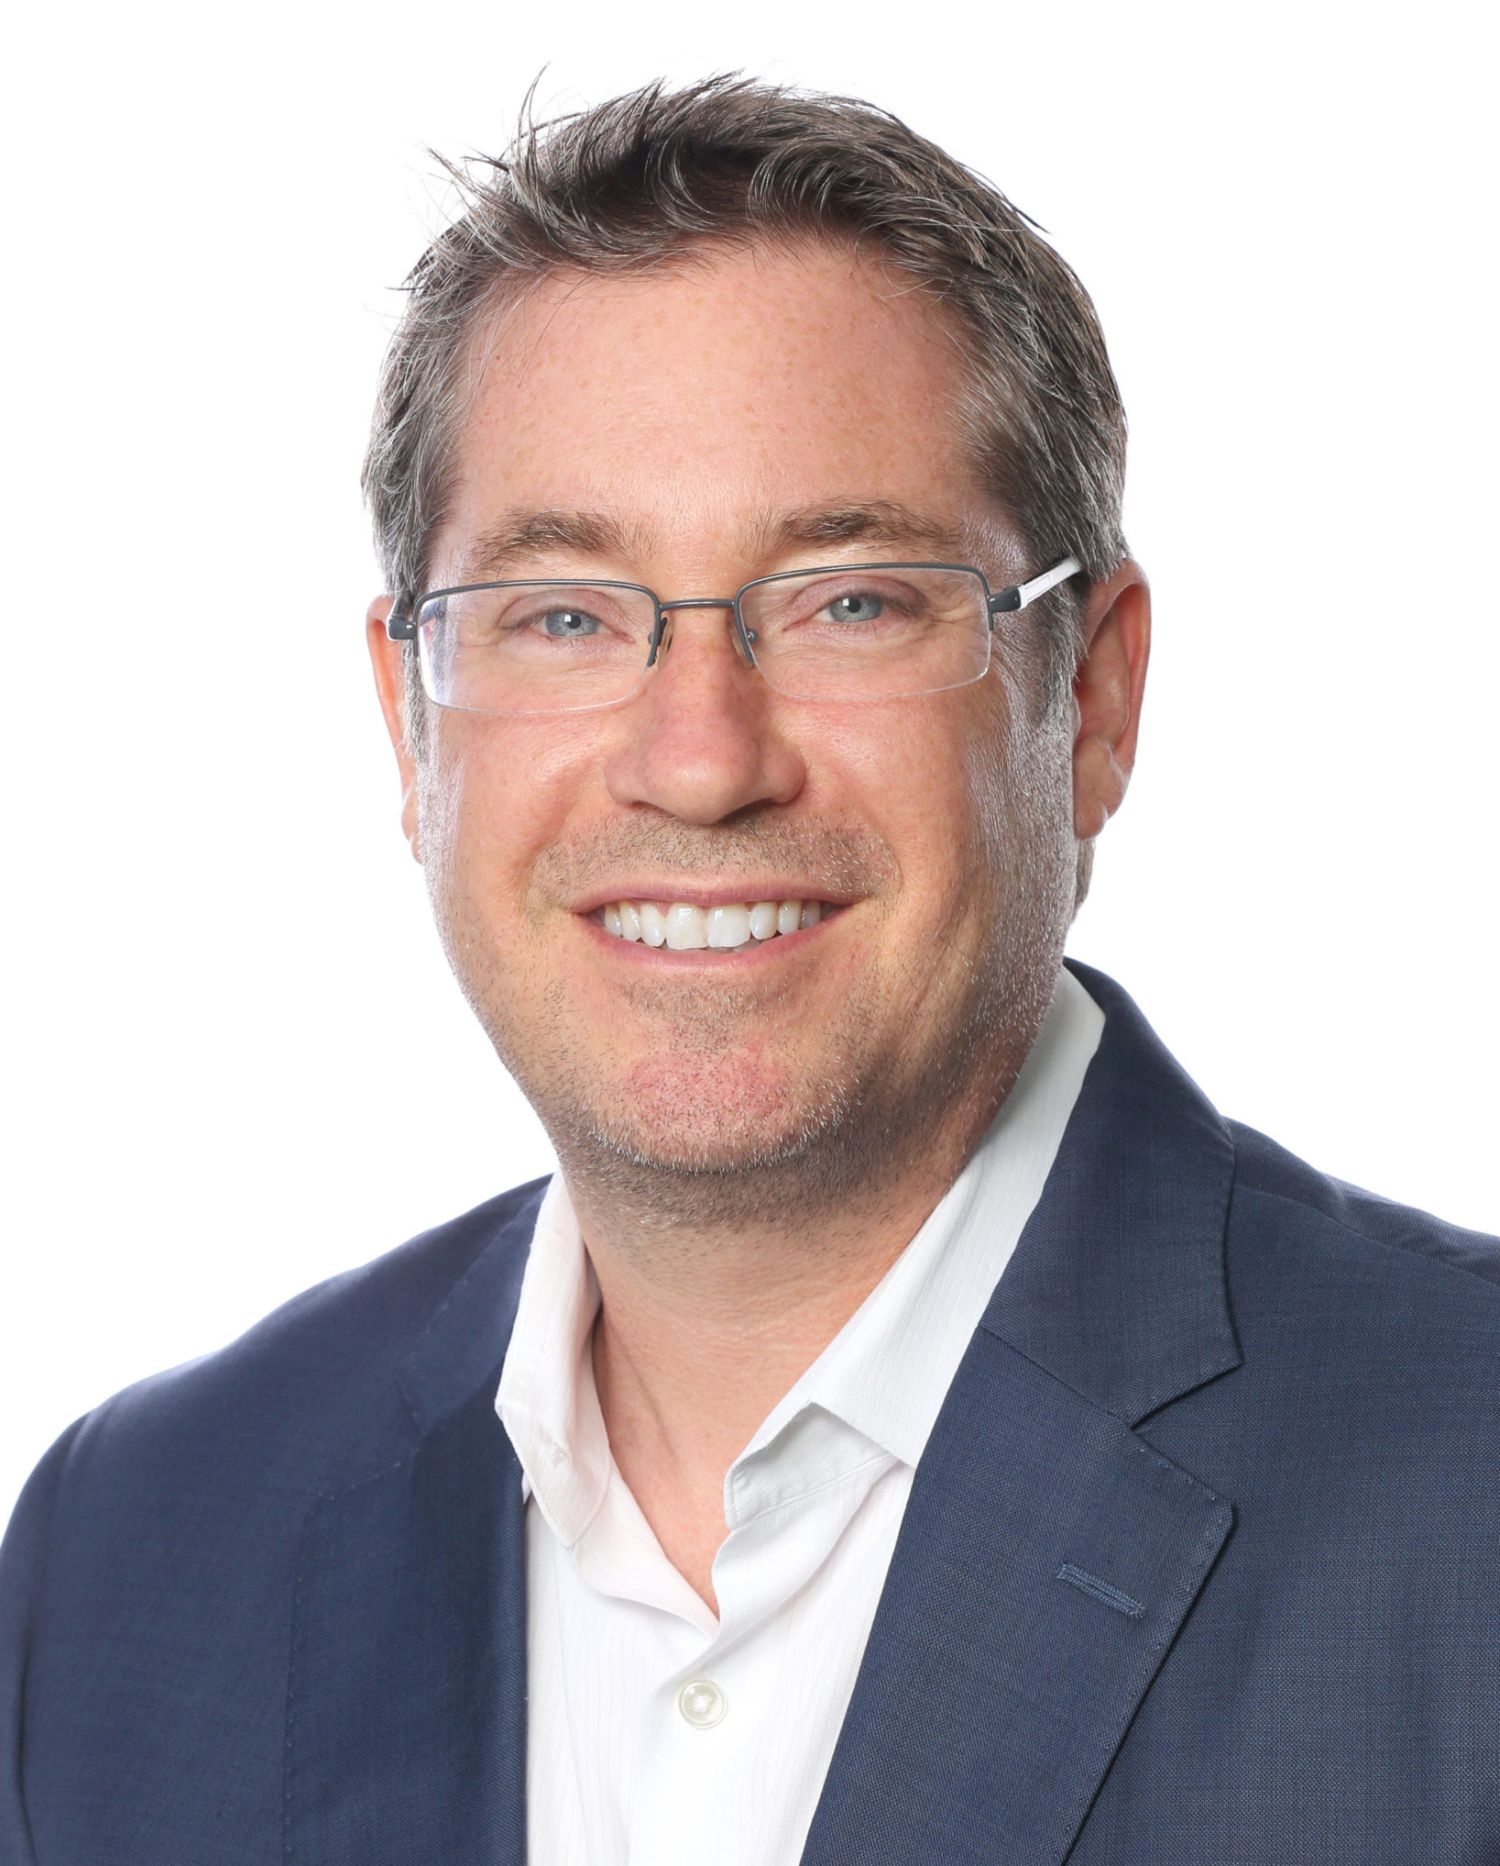 Keith Murphy is Founder and Executive Chairman of Organovo Holdings (NASDAQ:ONVO)